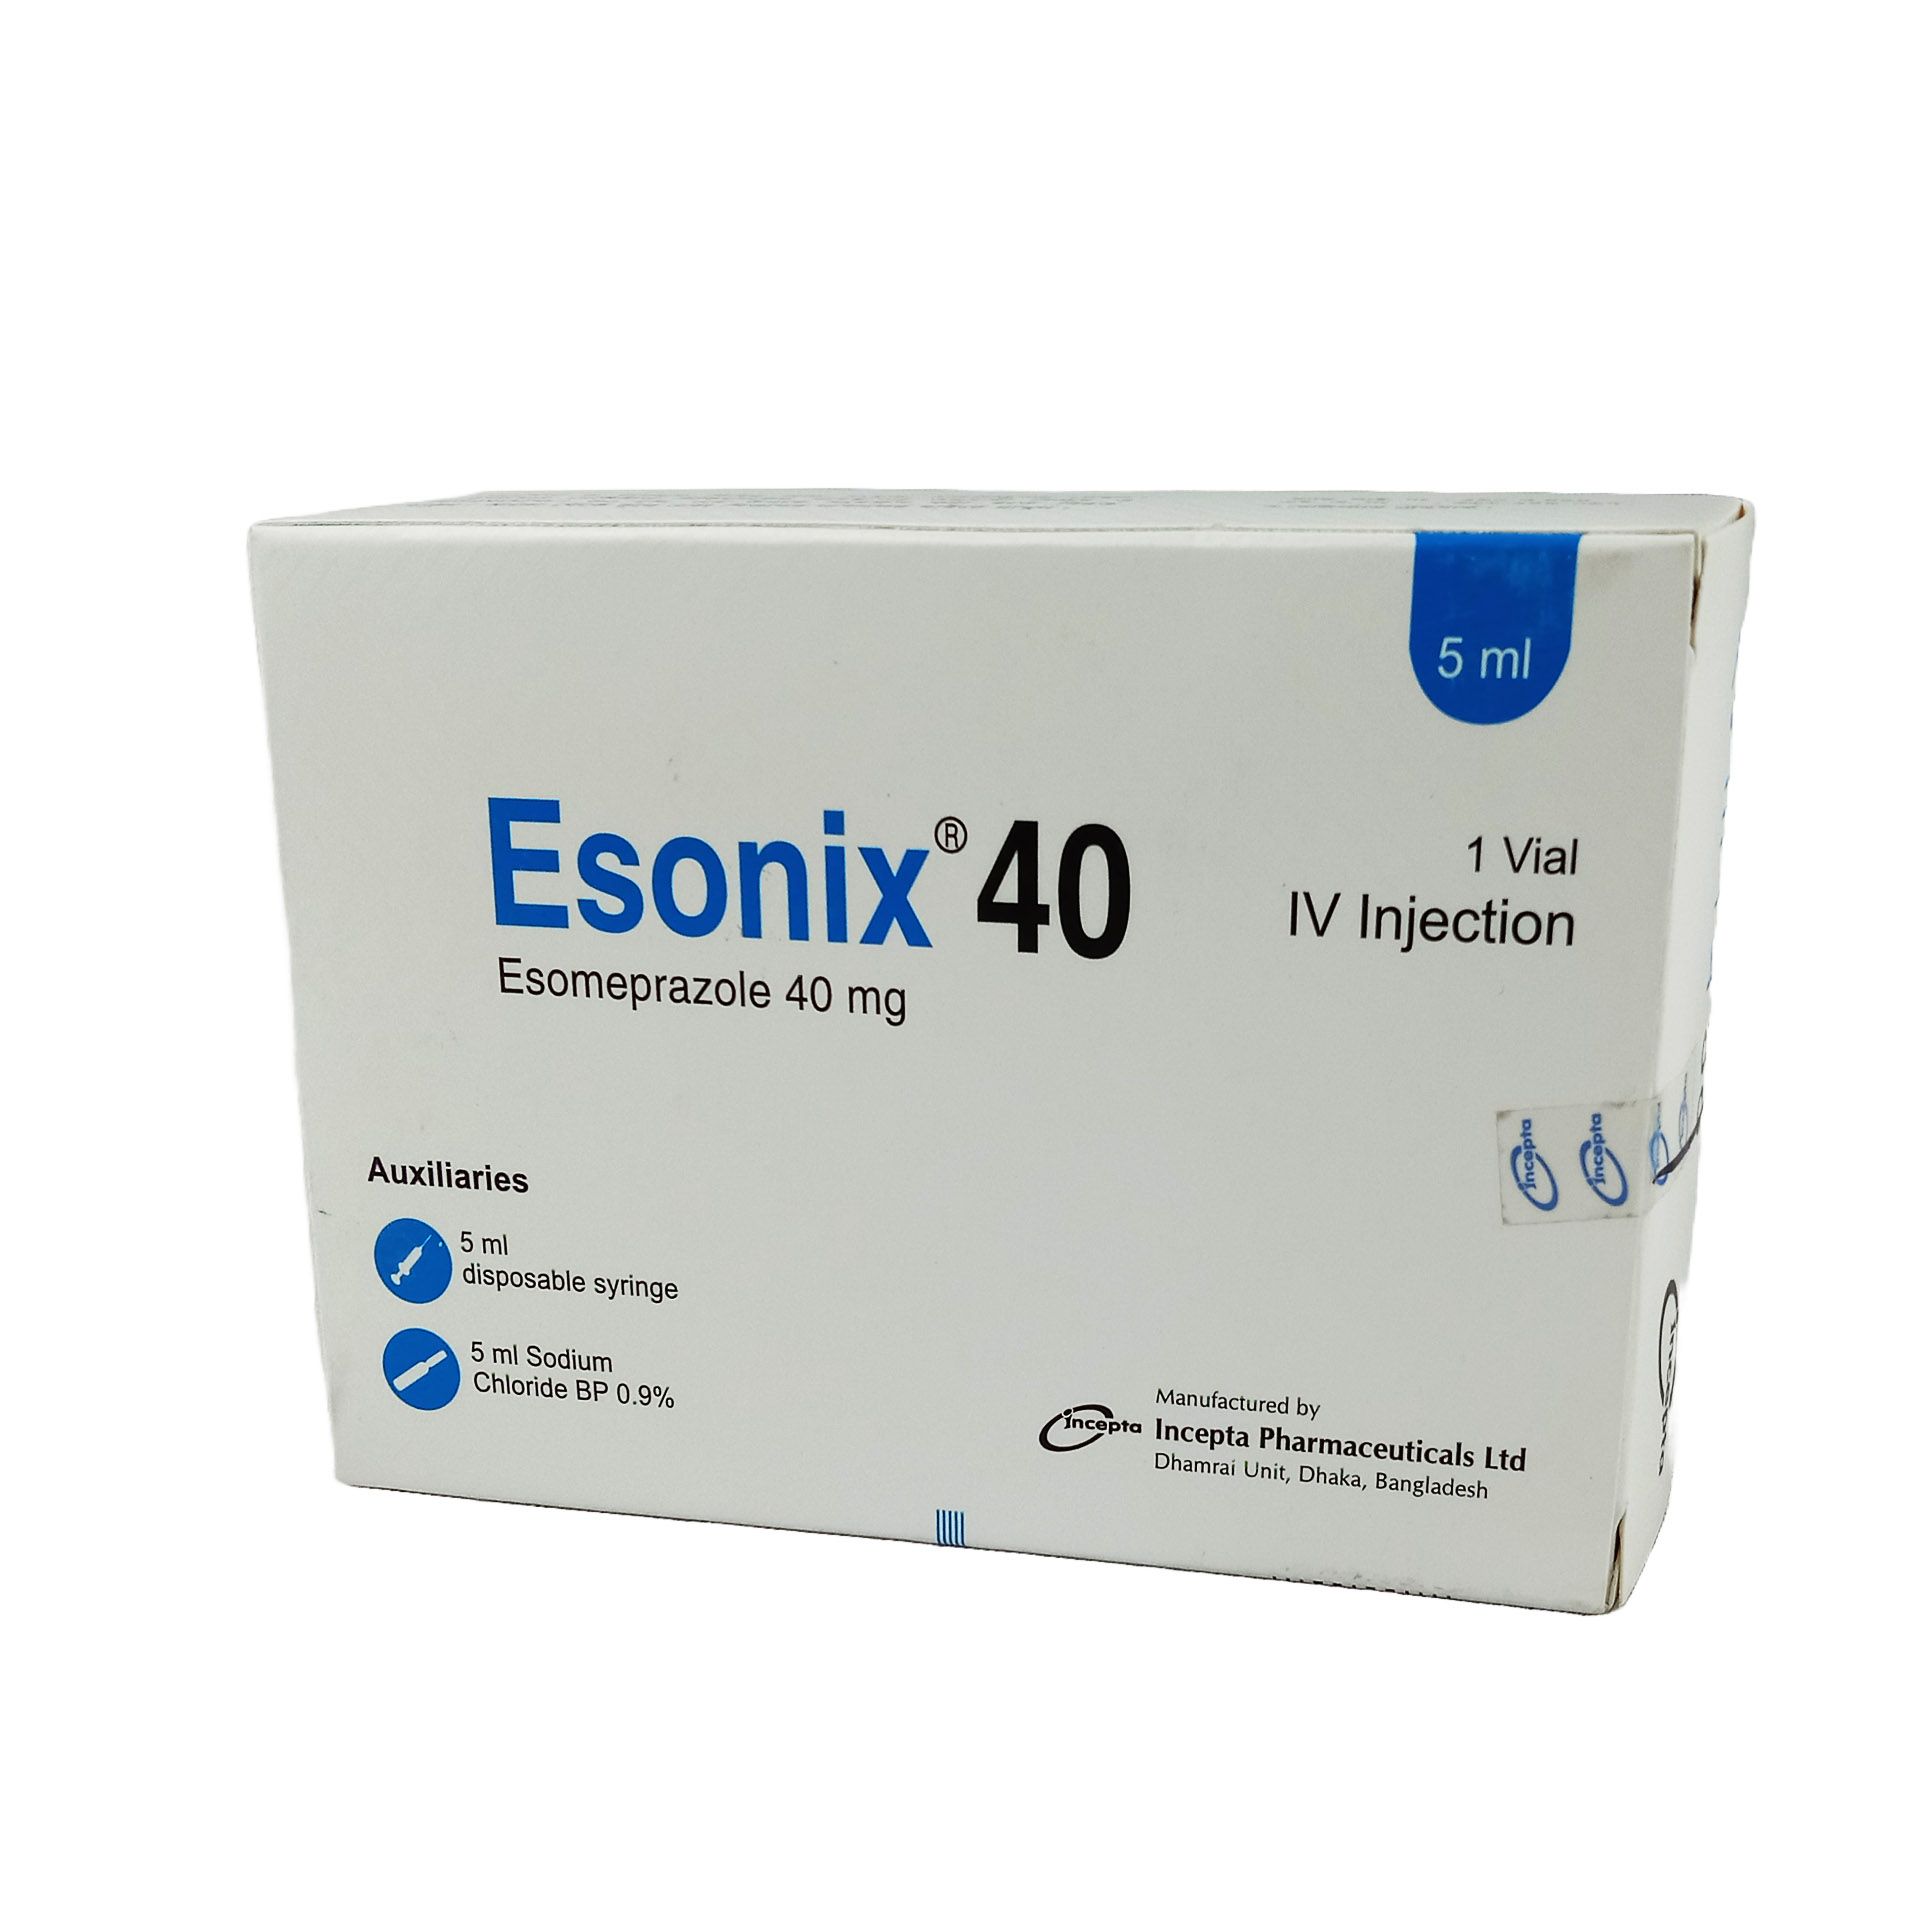 Esonix 40 IV 40mg/vial Injection